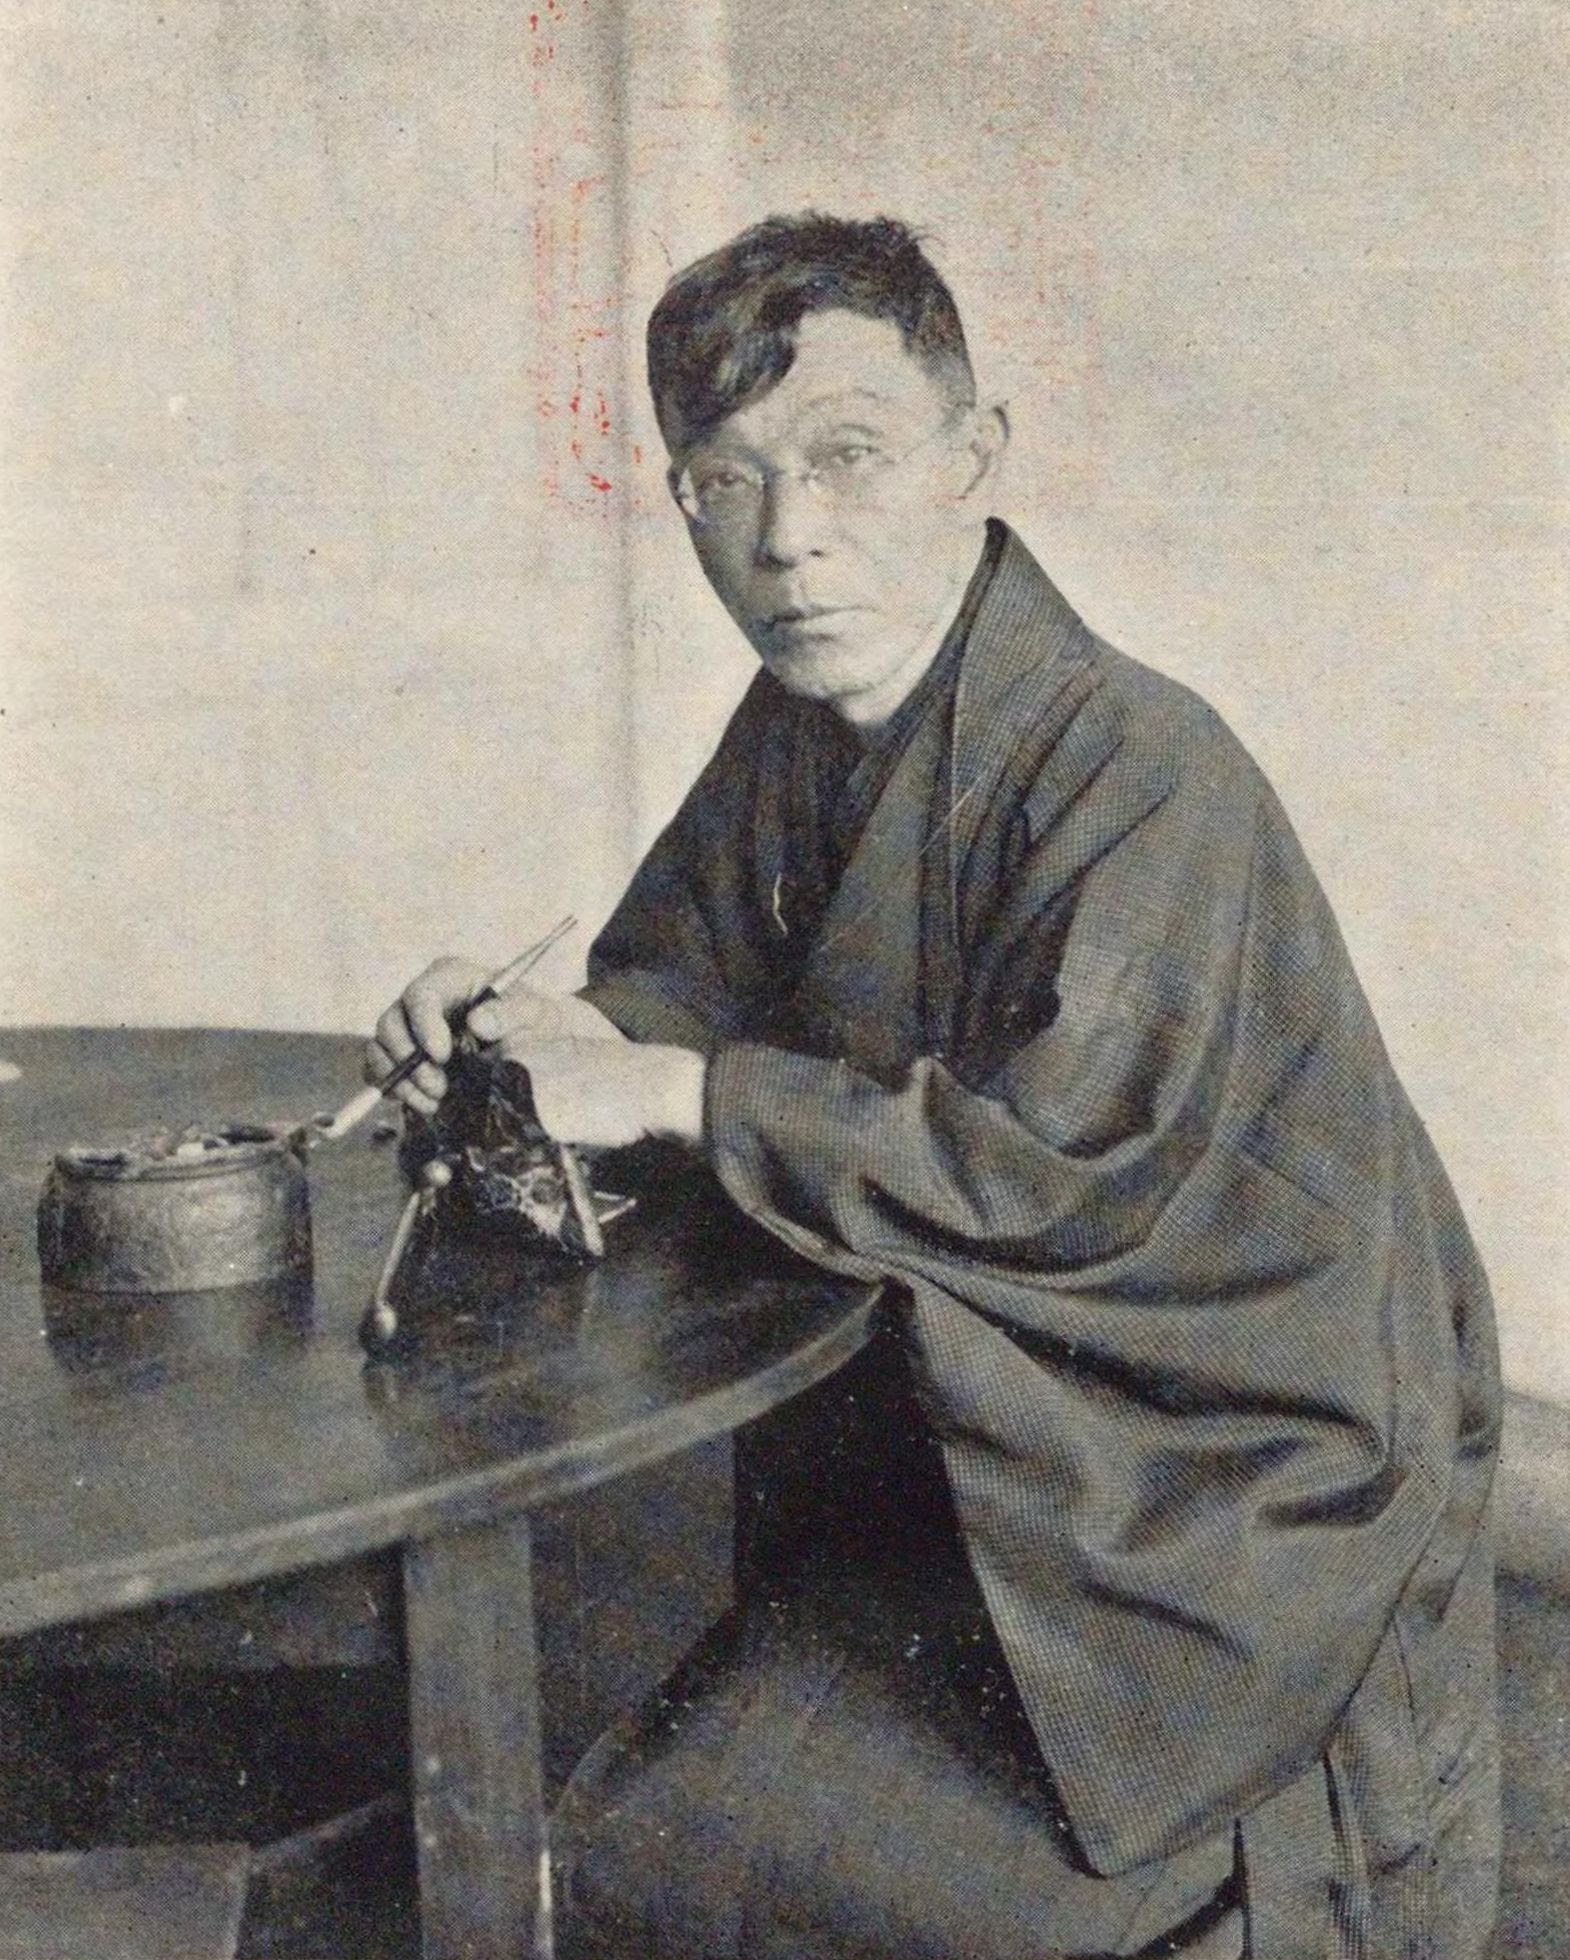 Retrato do autor Izumi Kyôka.